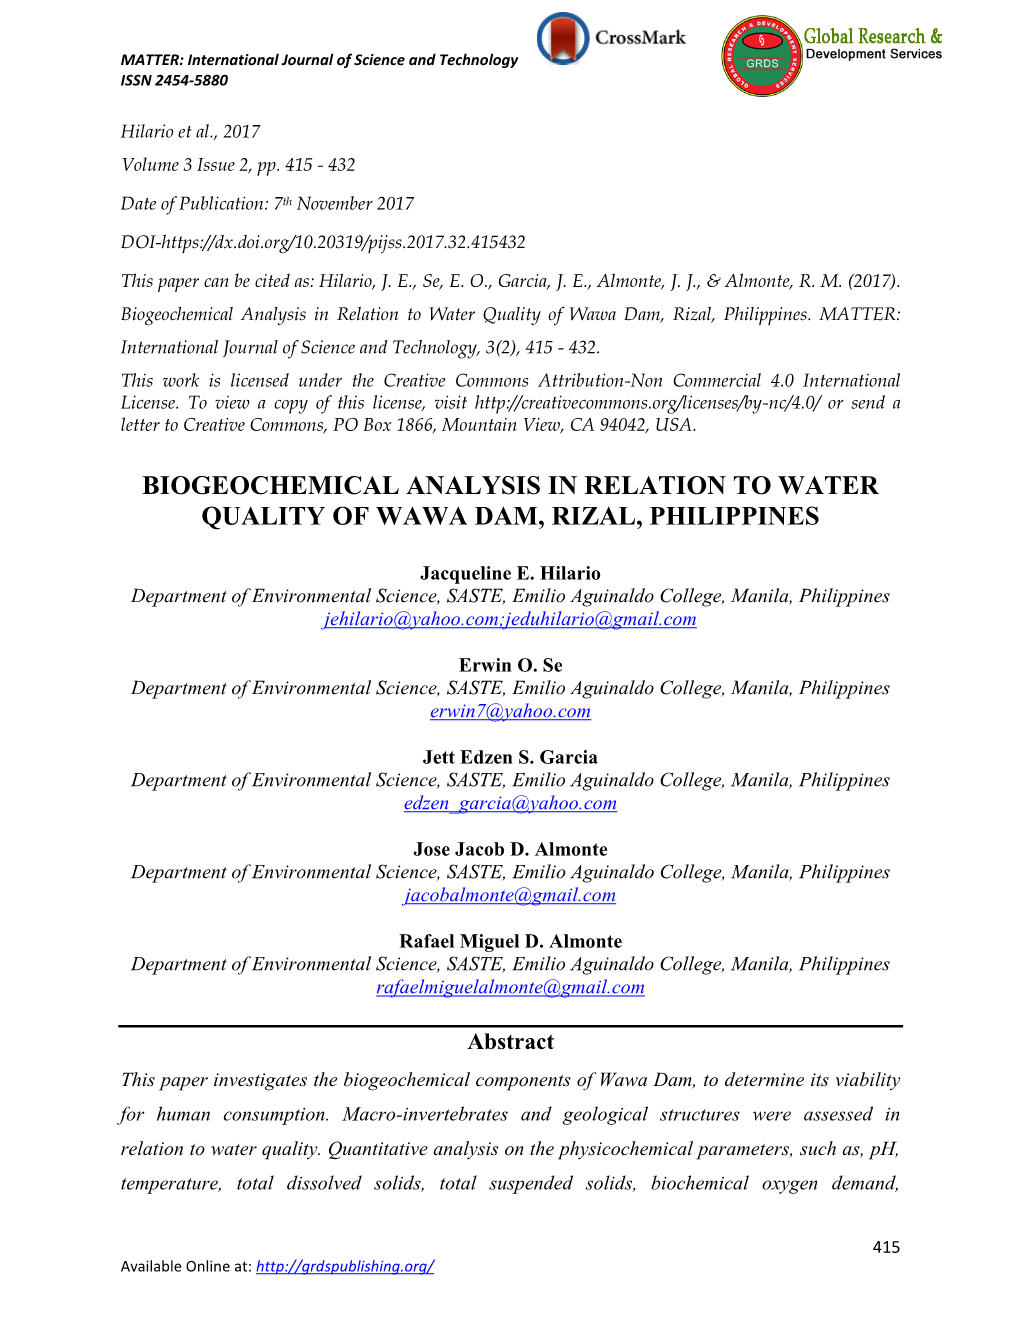 Biogeochemical Analysis in Relation to Water Quality of Wawa Dam, Rizal, Philippines